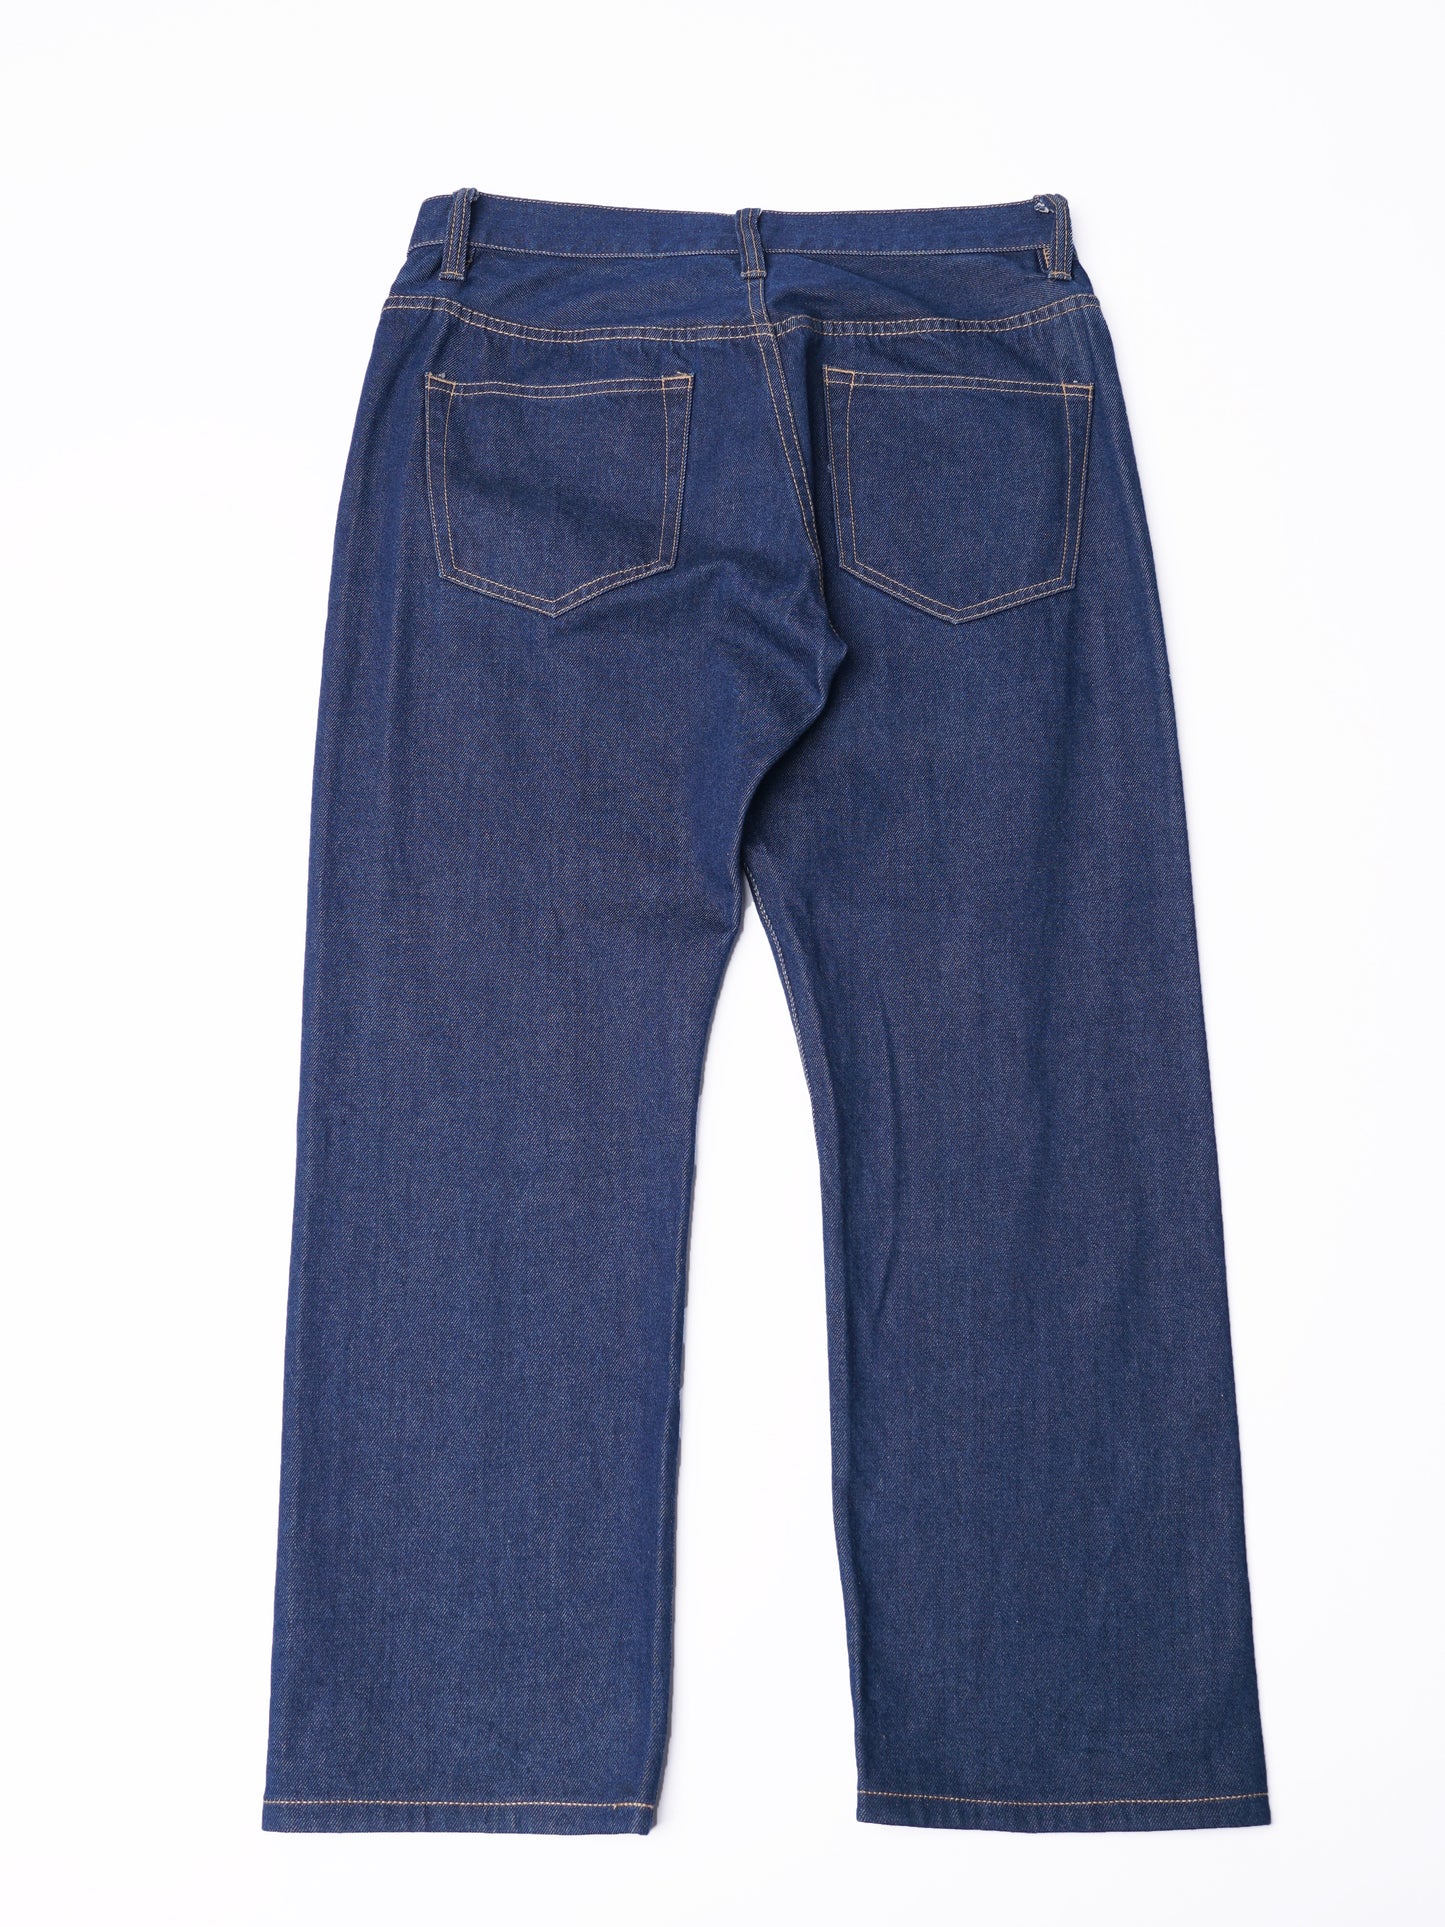 【Custom】H07 Indigo High-Rise 14oz. Straight Cut Jeans